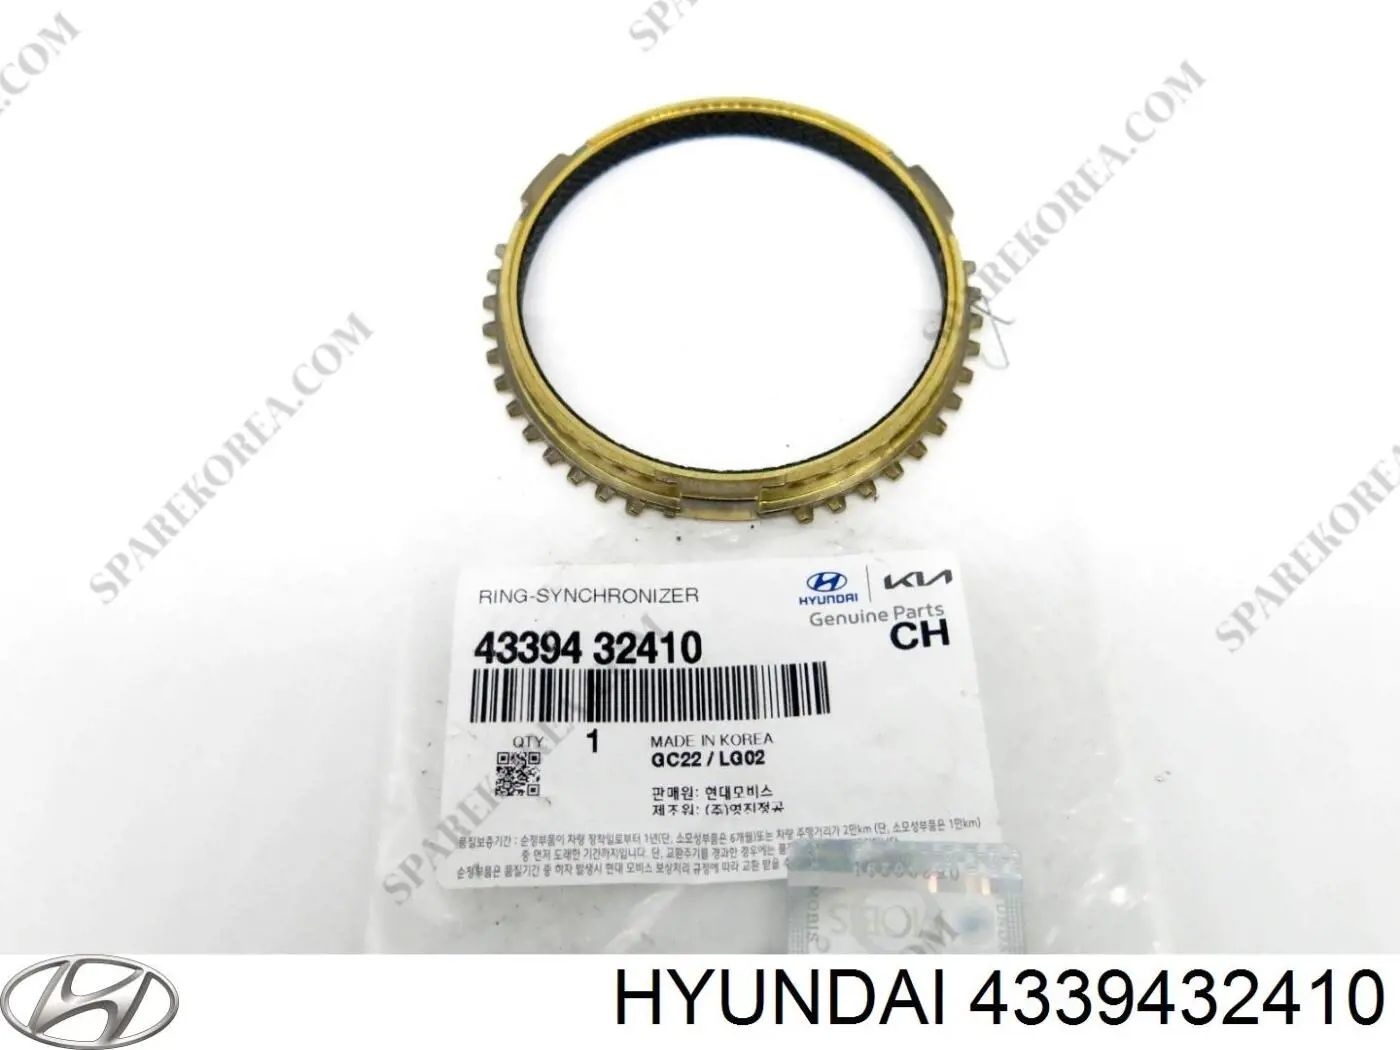 Кольцо синхронизатора на Hyundai Accent SB